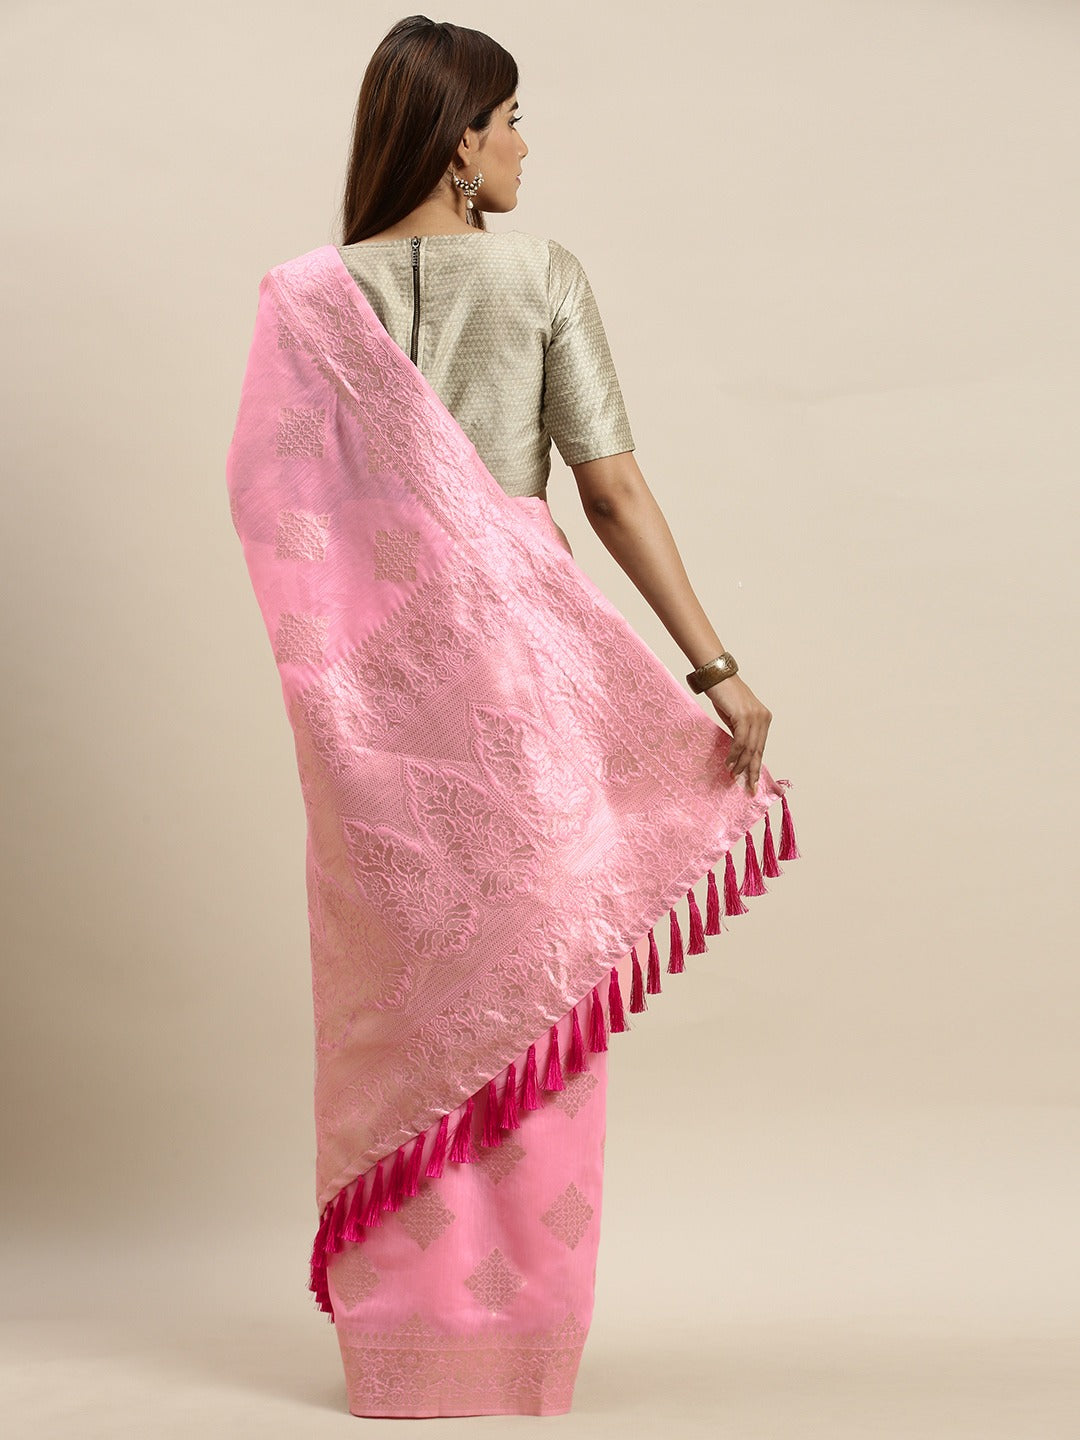 Stylish Light Pink Colour Woven Design Cotton Saree 